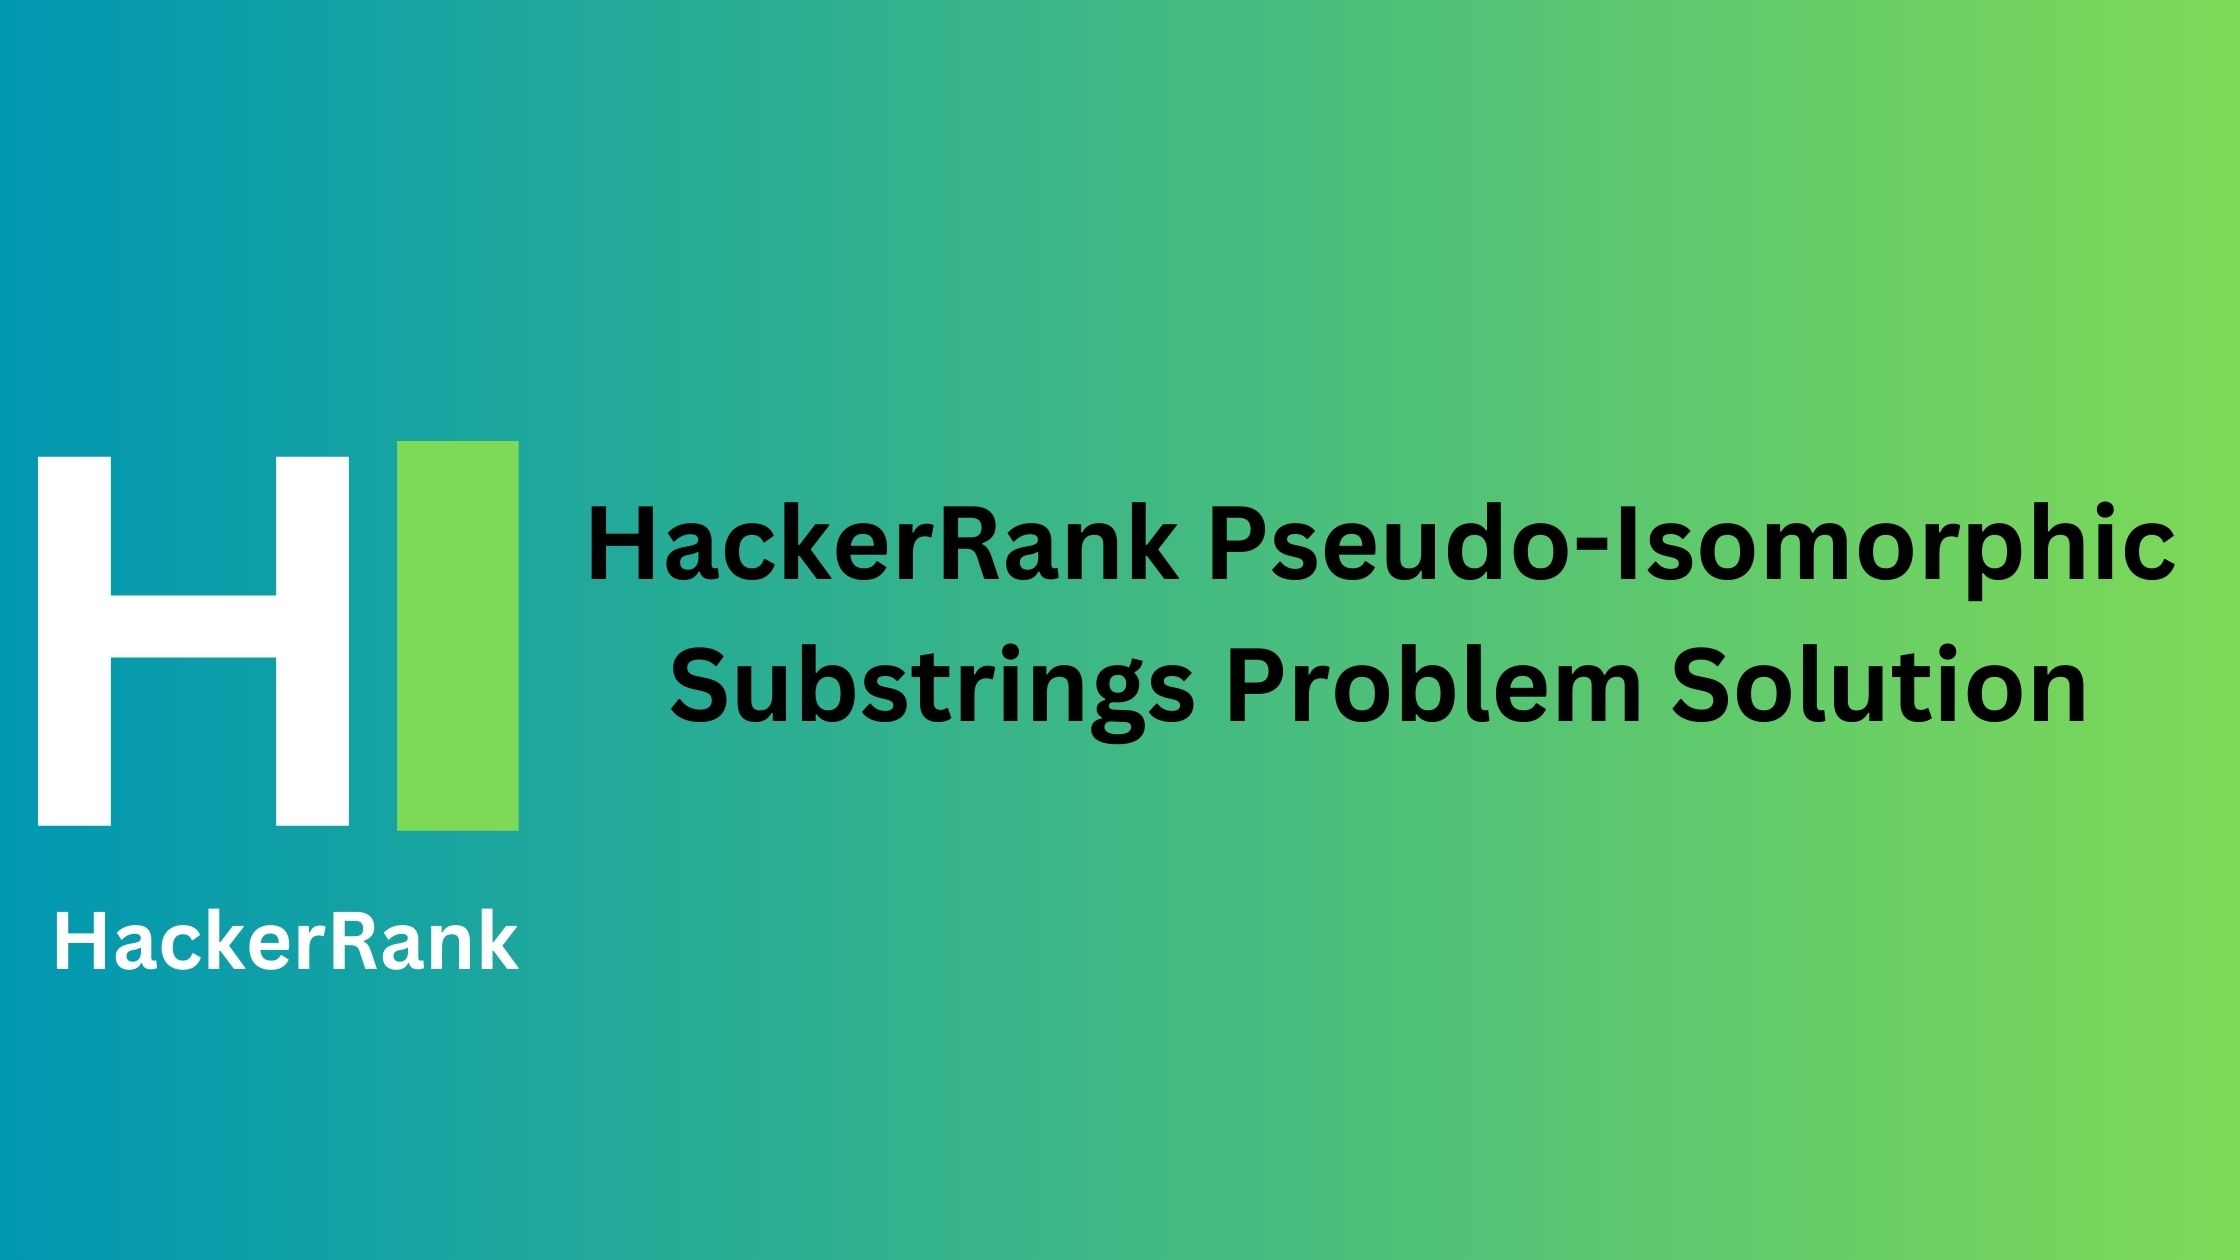 HackerRank Pseudo-Isomorphic Substrings Problem Solution